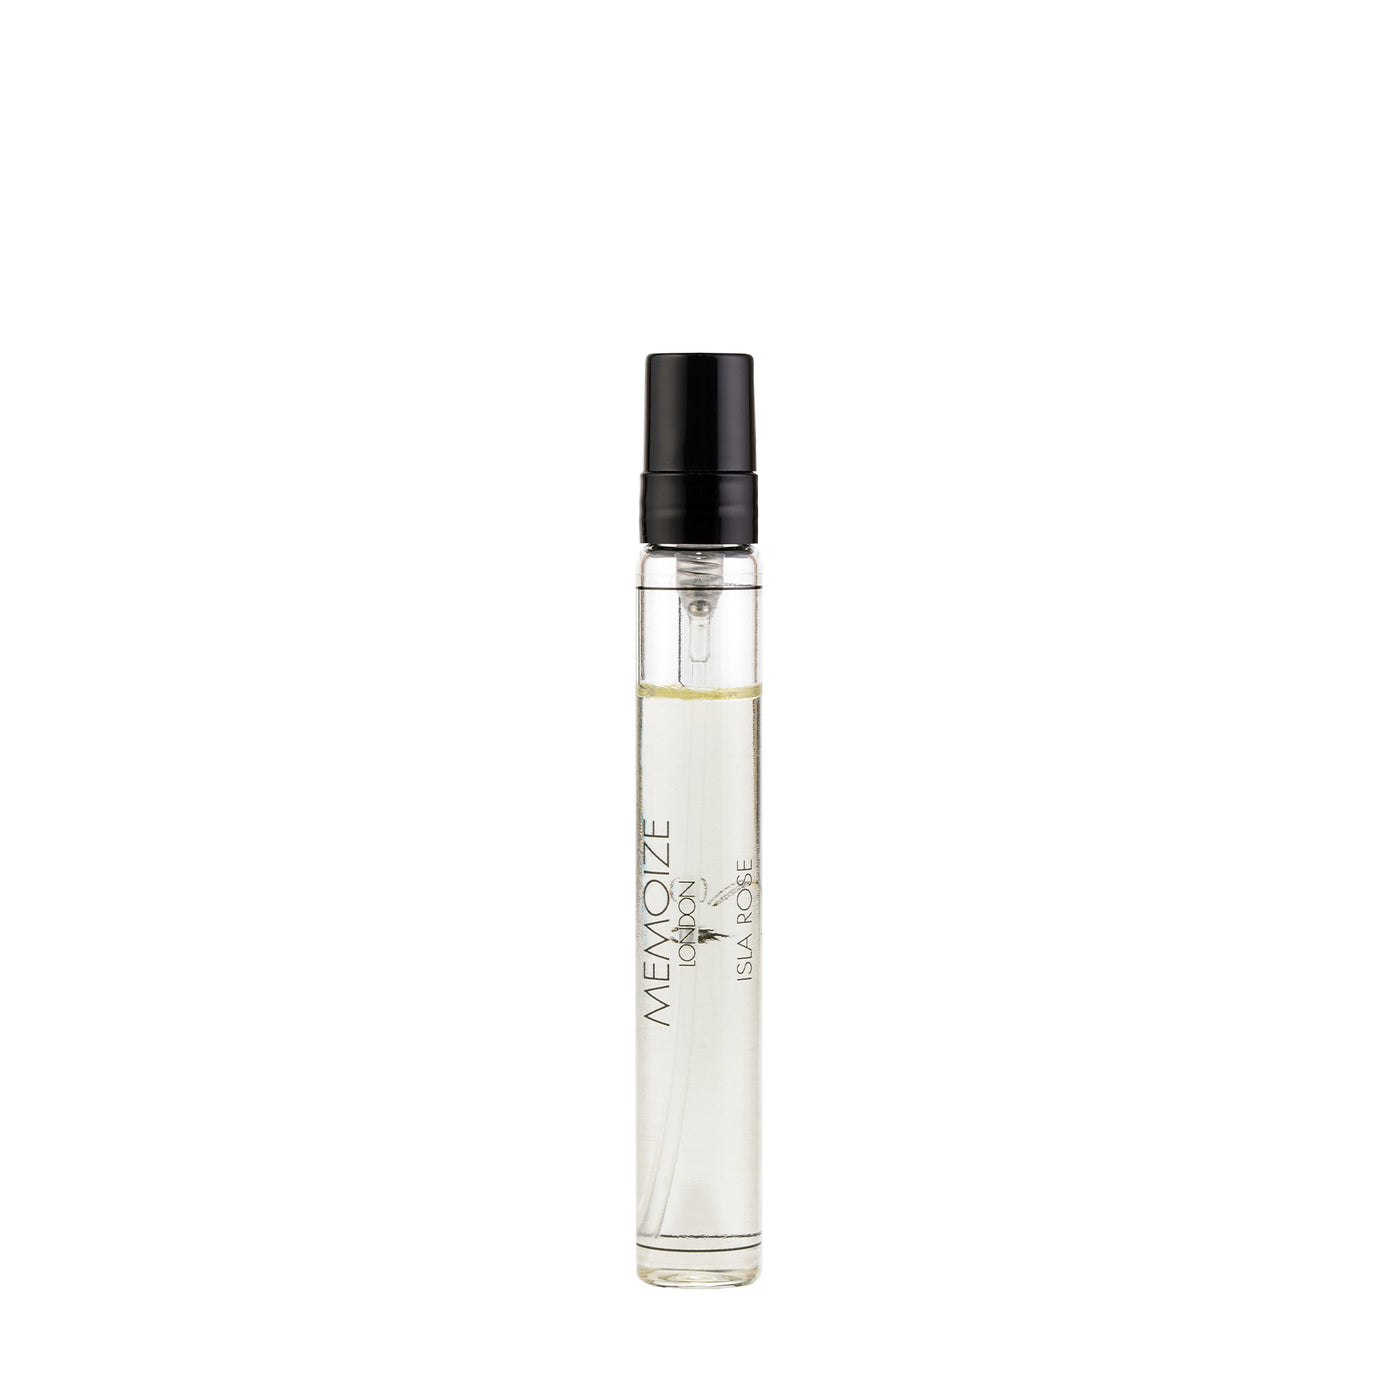 Memoize London ISLA ROSE Extait de Parfum 7.5ml